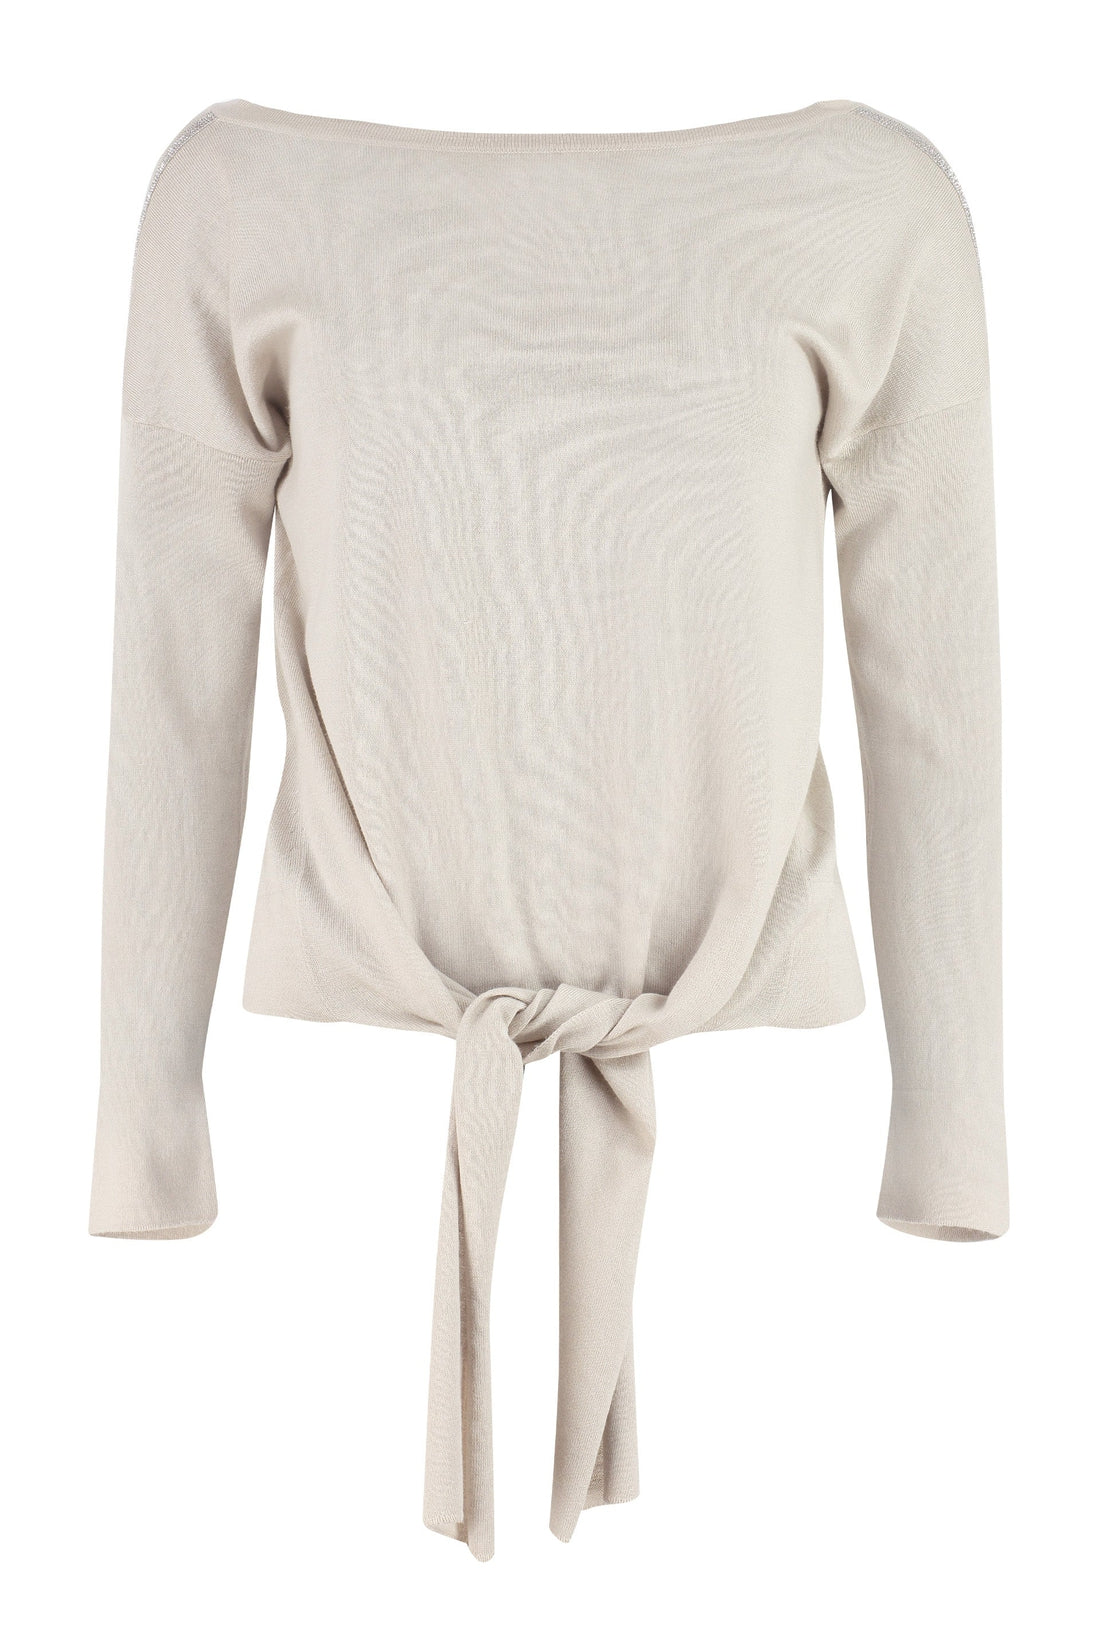 Fabiana Filippi-OUTLET-SALE-Wool blend sweater-ARCHIVIST